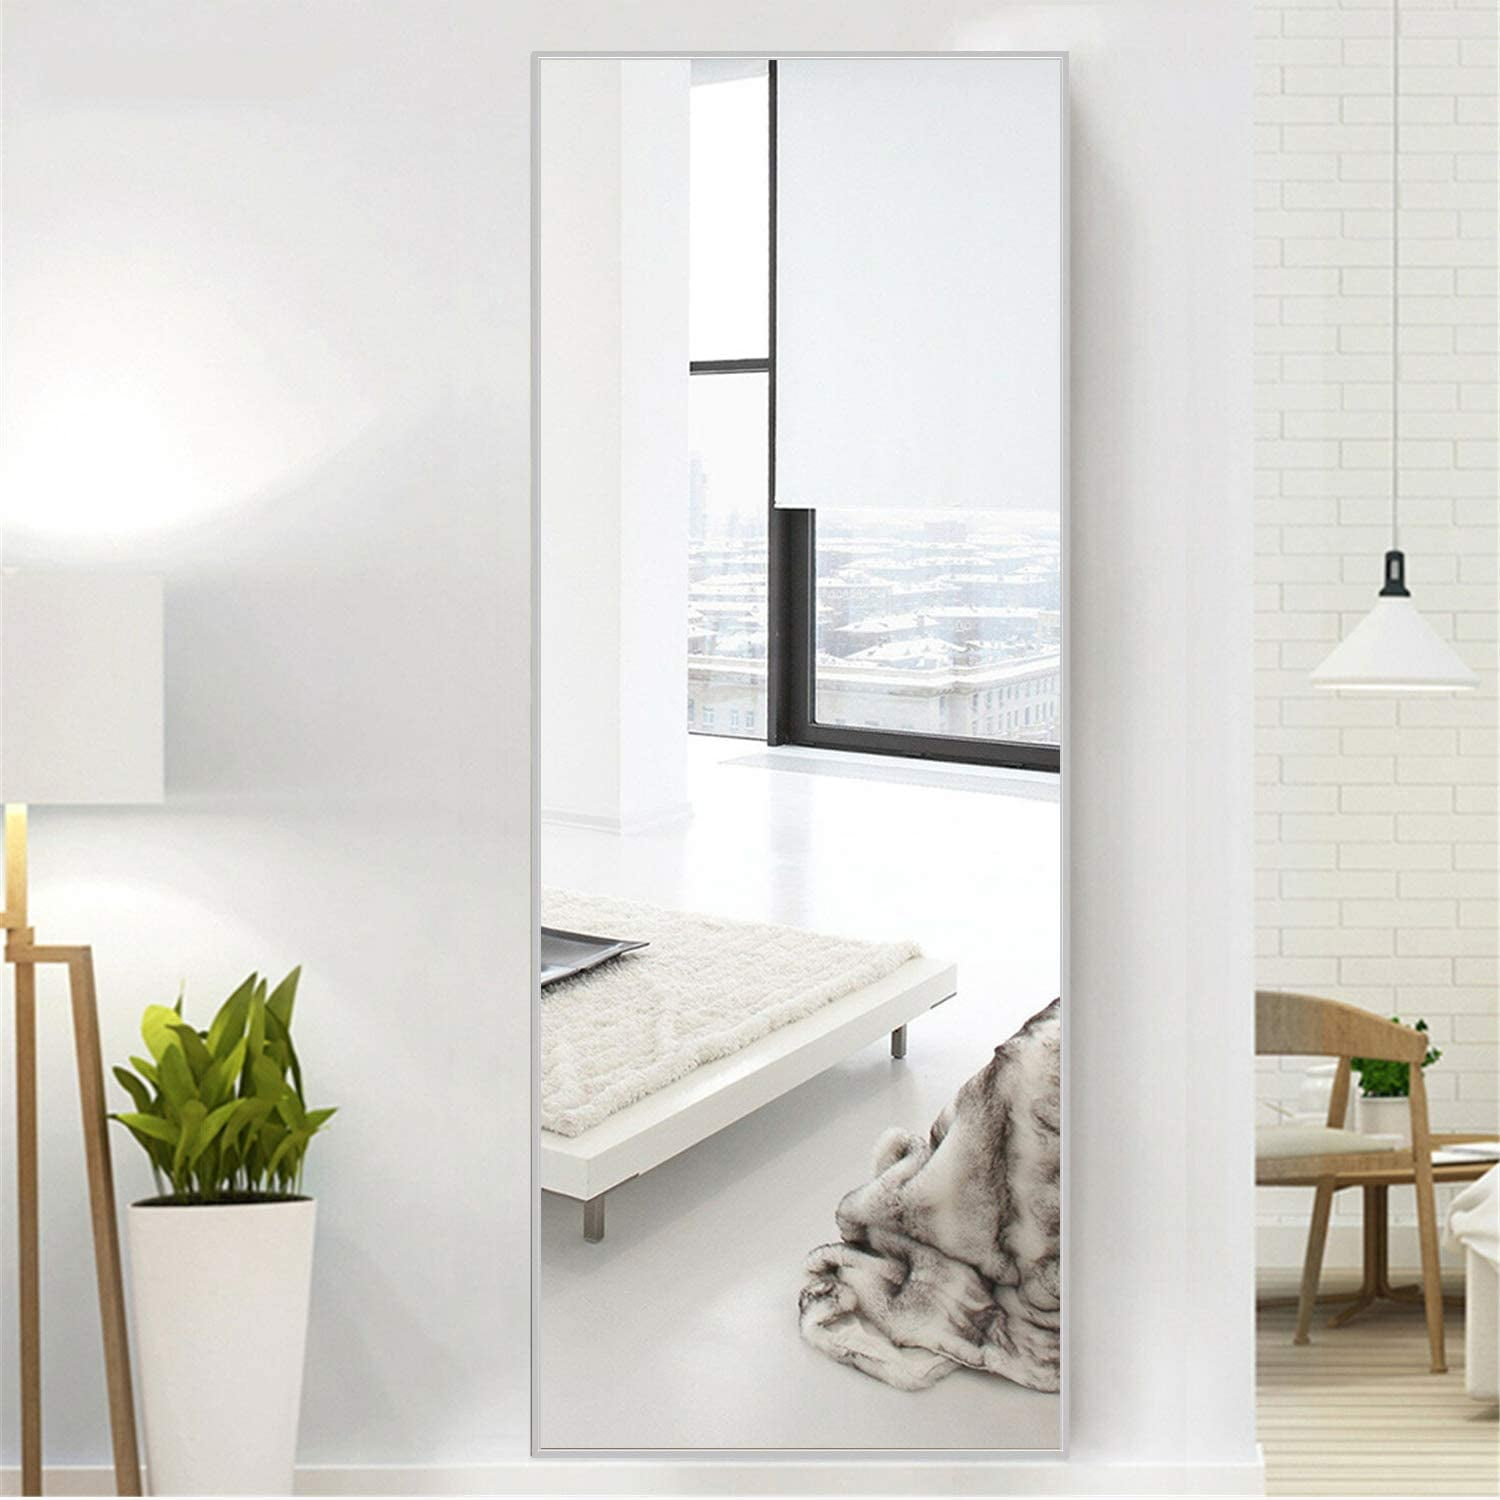 Full Length Mirror Floor Mirror Hanging/Leaning Large Wall Mounted Mirror Horizontal/Vertical